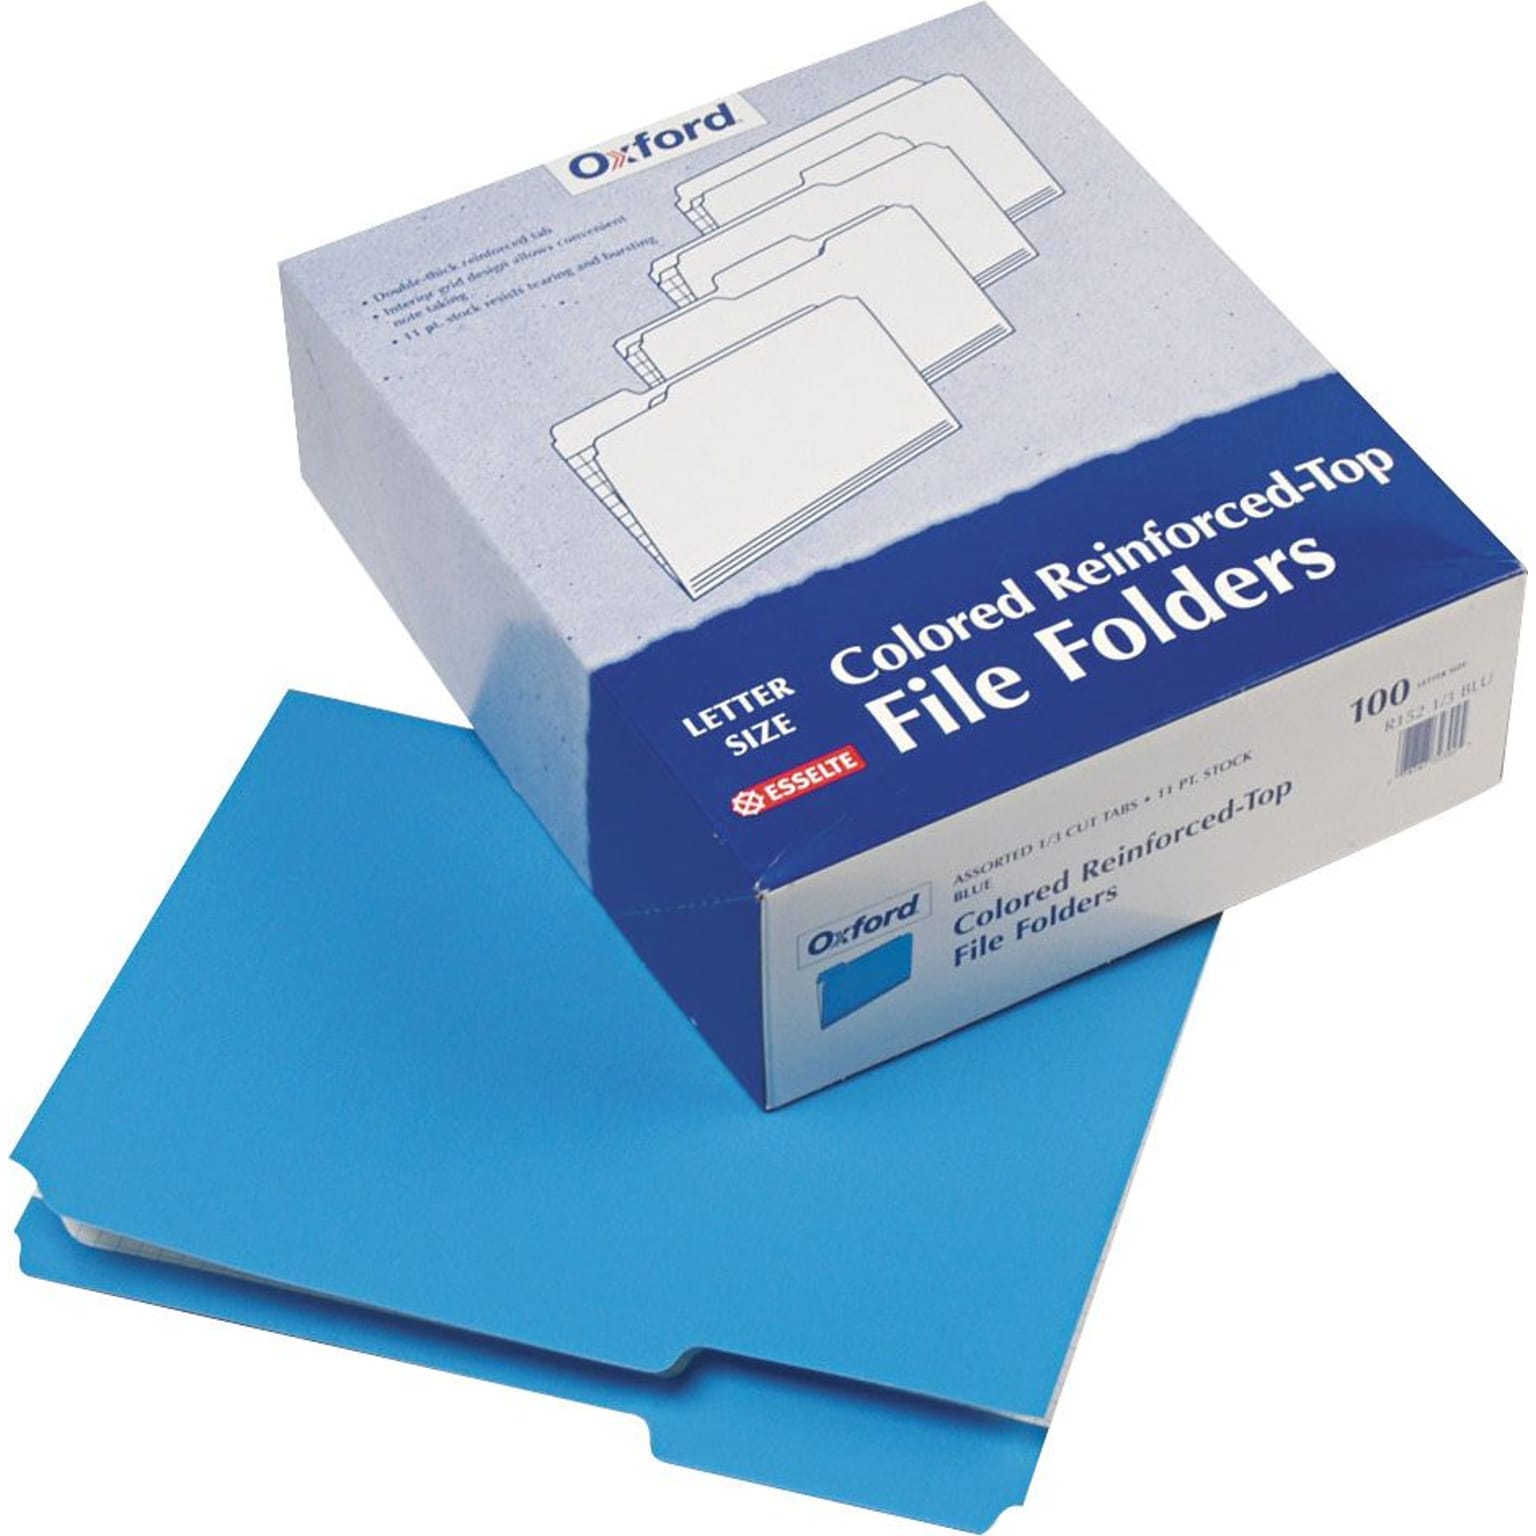 Pendaflex Reinforced Top File Folder, 1/3 Tab Cut, Blue, Letter Size, Holds 8 1/2 x 11, 100/Box (PFX R152 1/3 BLU)